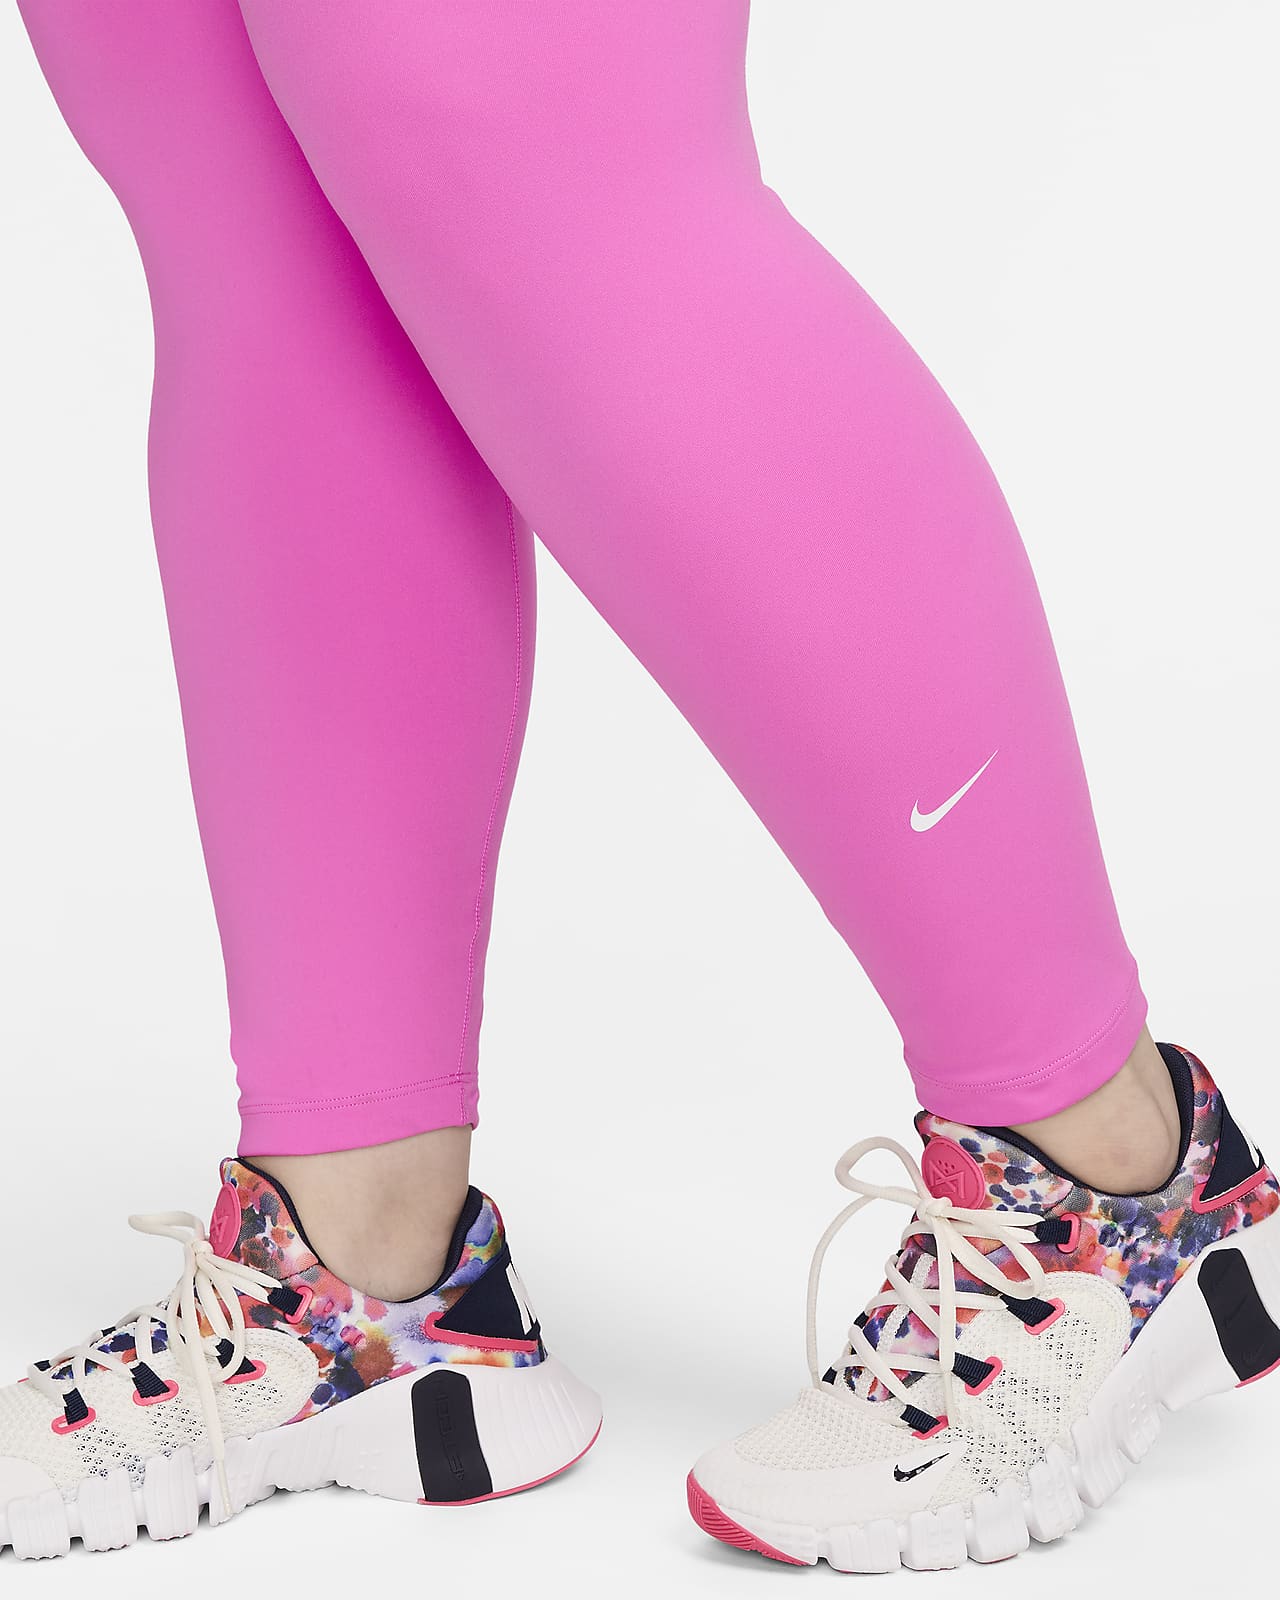 NIKE ONE Tights Training Gym Running Women's DRI-FIT Mid Rise Full Length |  eBay